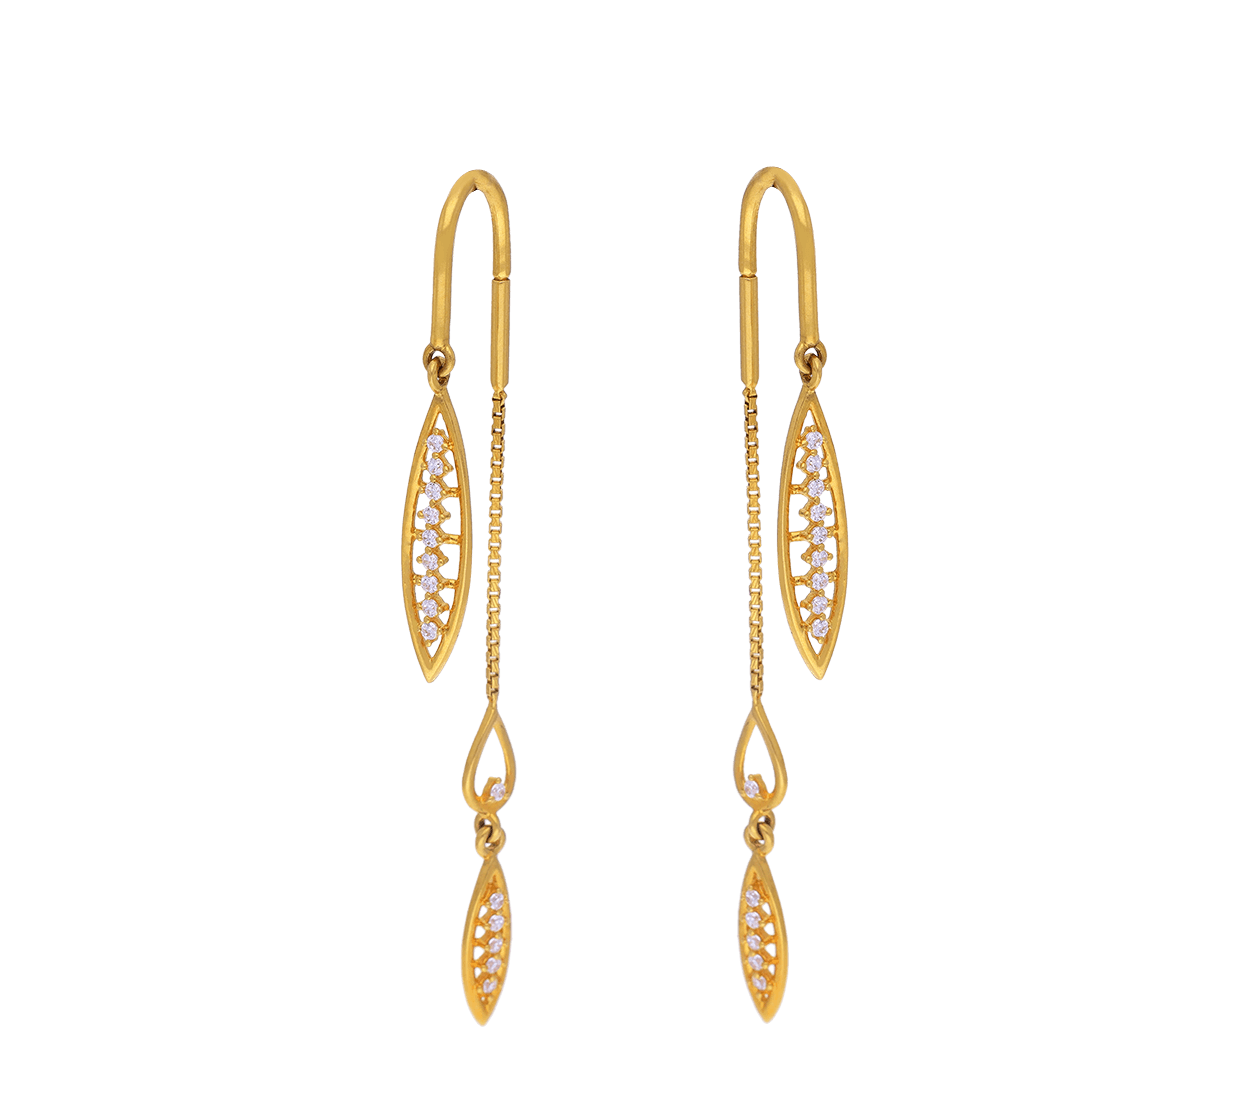 Fashion Gold Sui Dhaga Wedding Jhumka Earrings Indian Bollywood Jewelry  Freeship | eBay